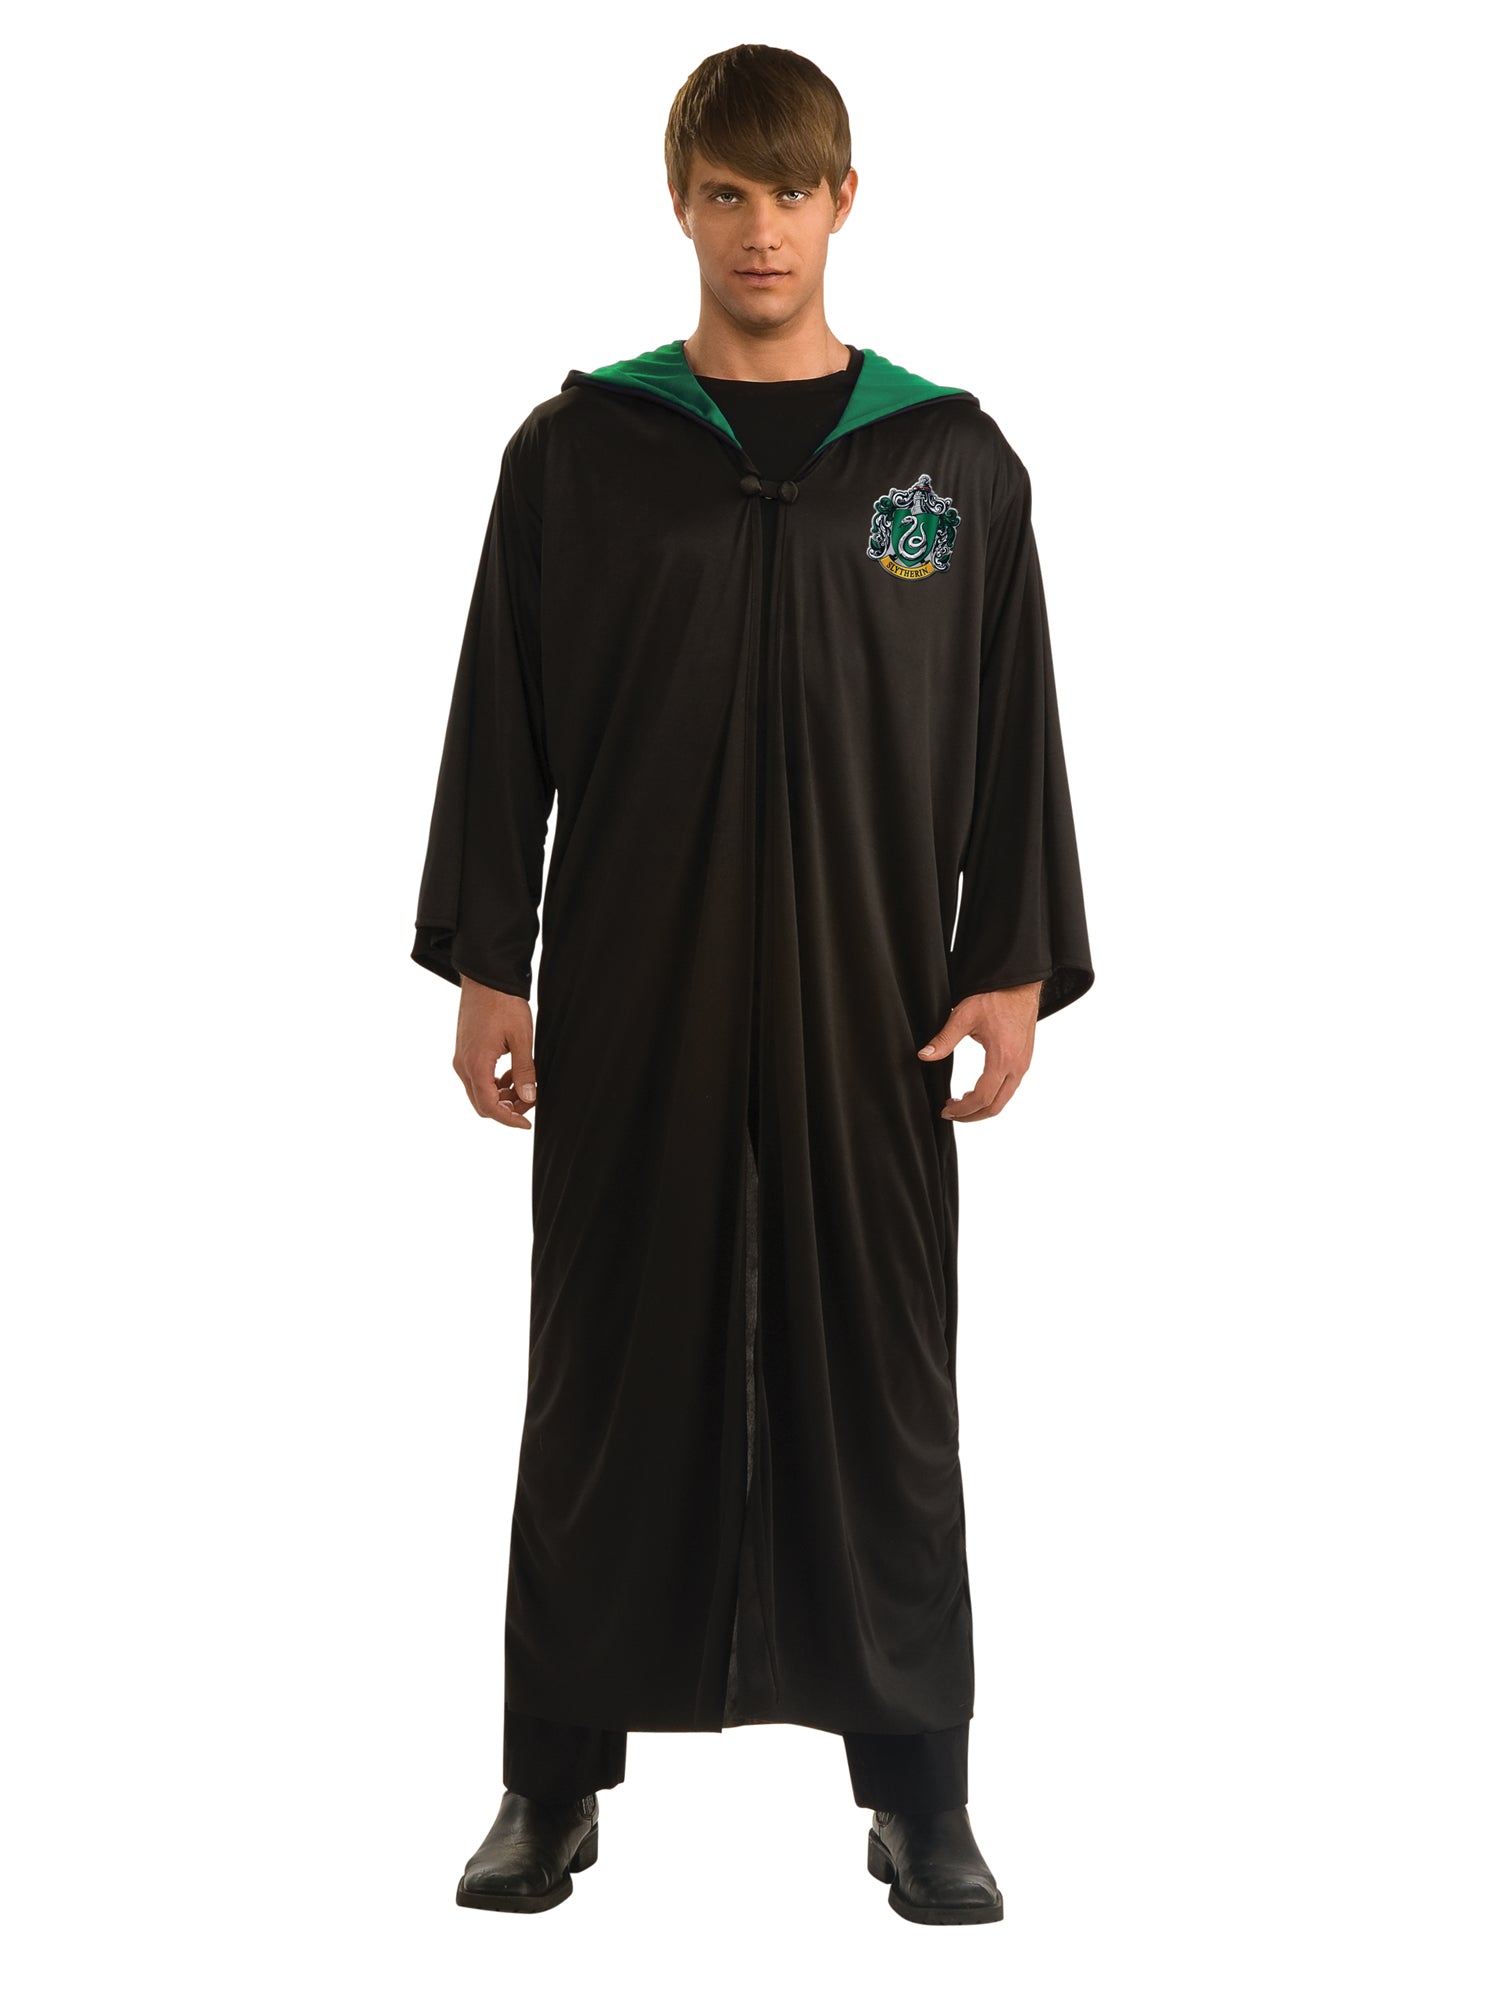 Slytherin, Multi, Harry Potter, Adult Costume, Standard, Front